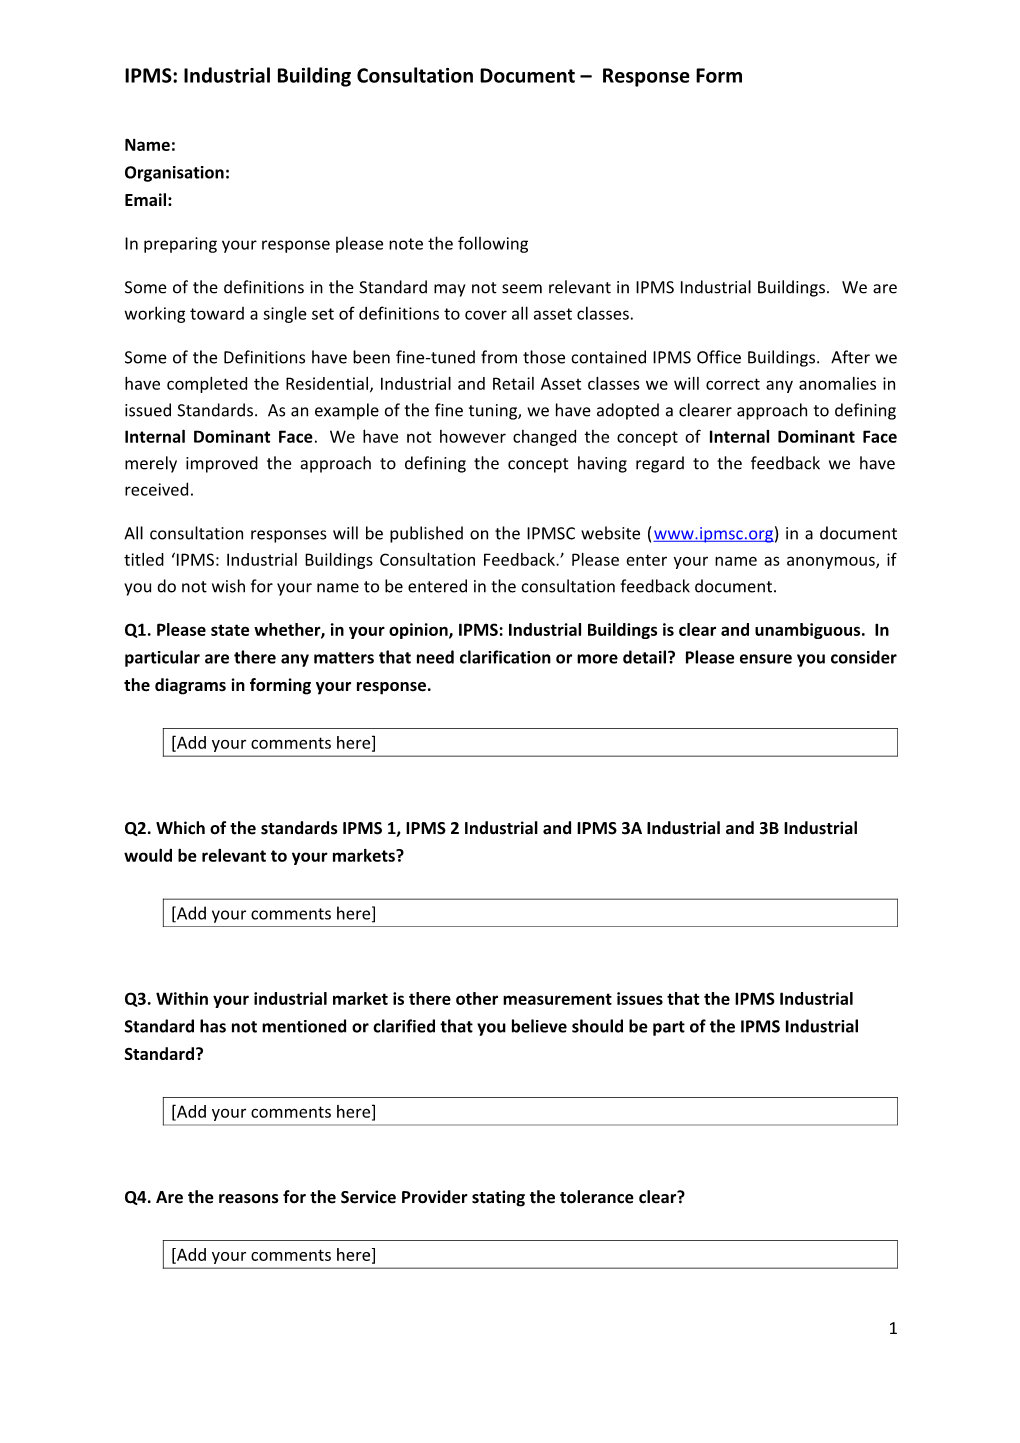 IPMS: Industrial Building Consultation Document Response Form